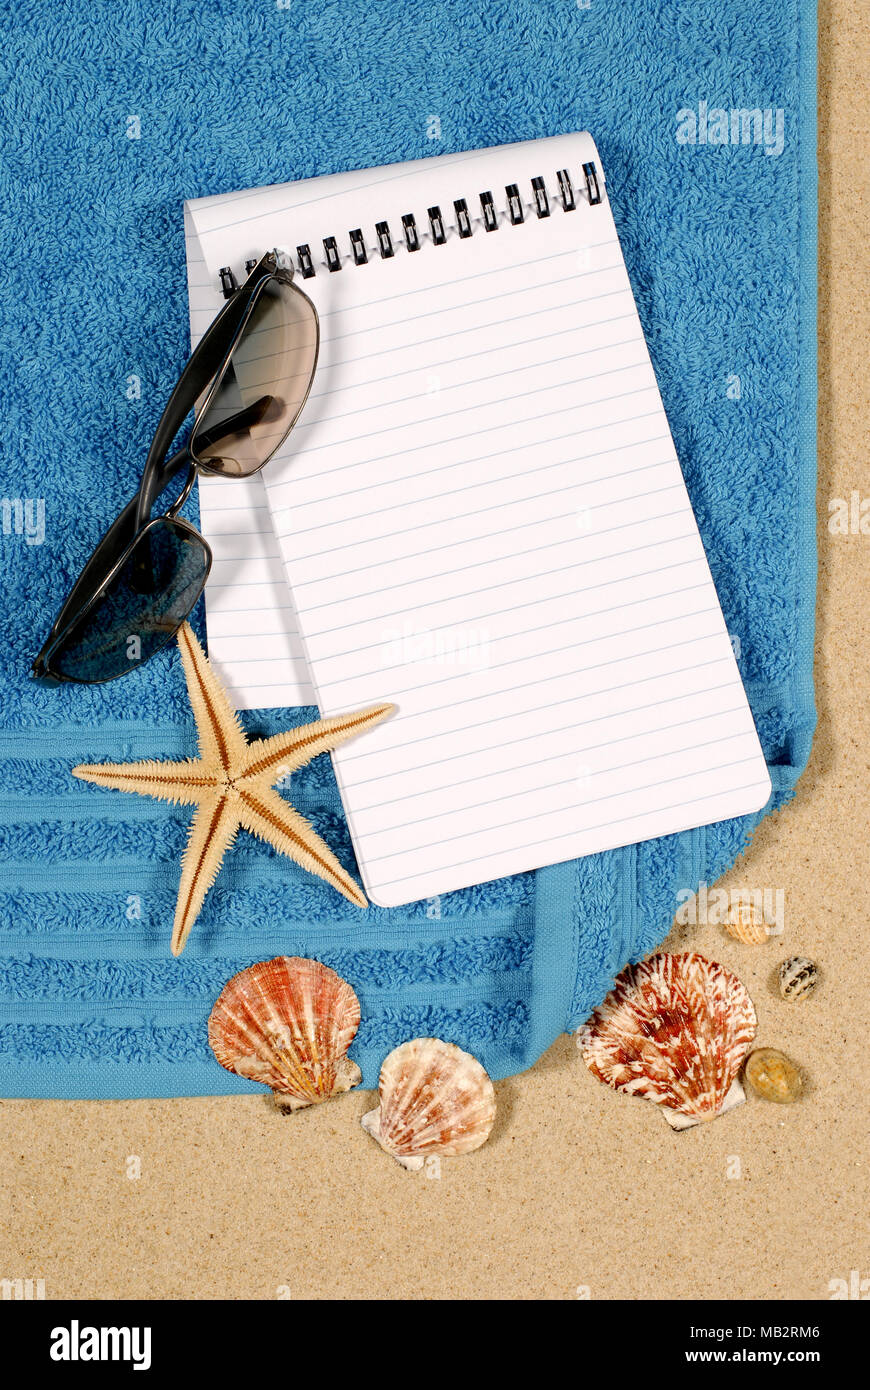 Beach scene with shells, starfish, towel, sunglasses and blank spiral notepad Stock Photo